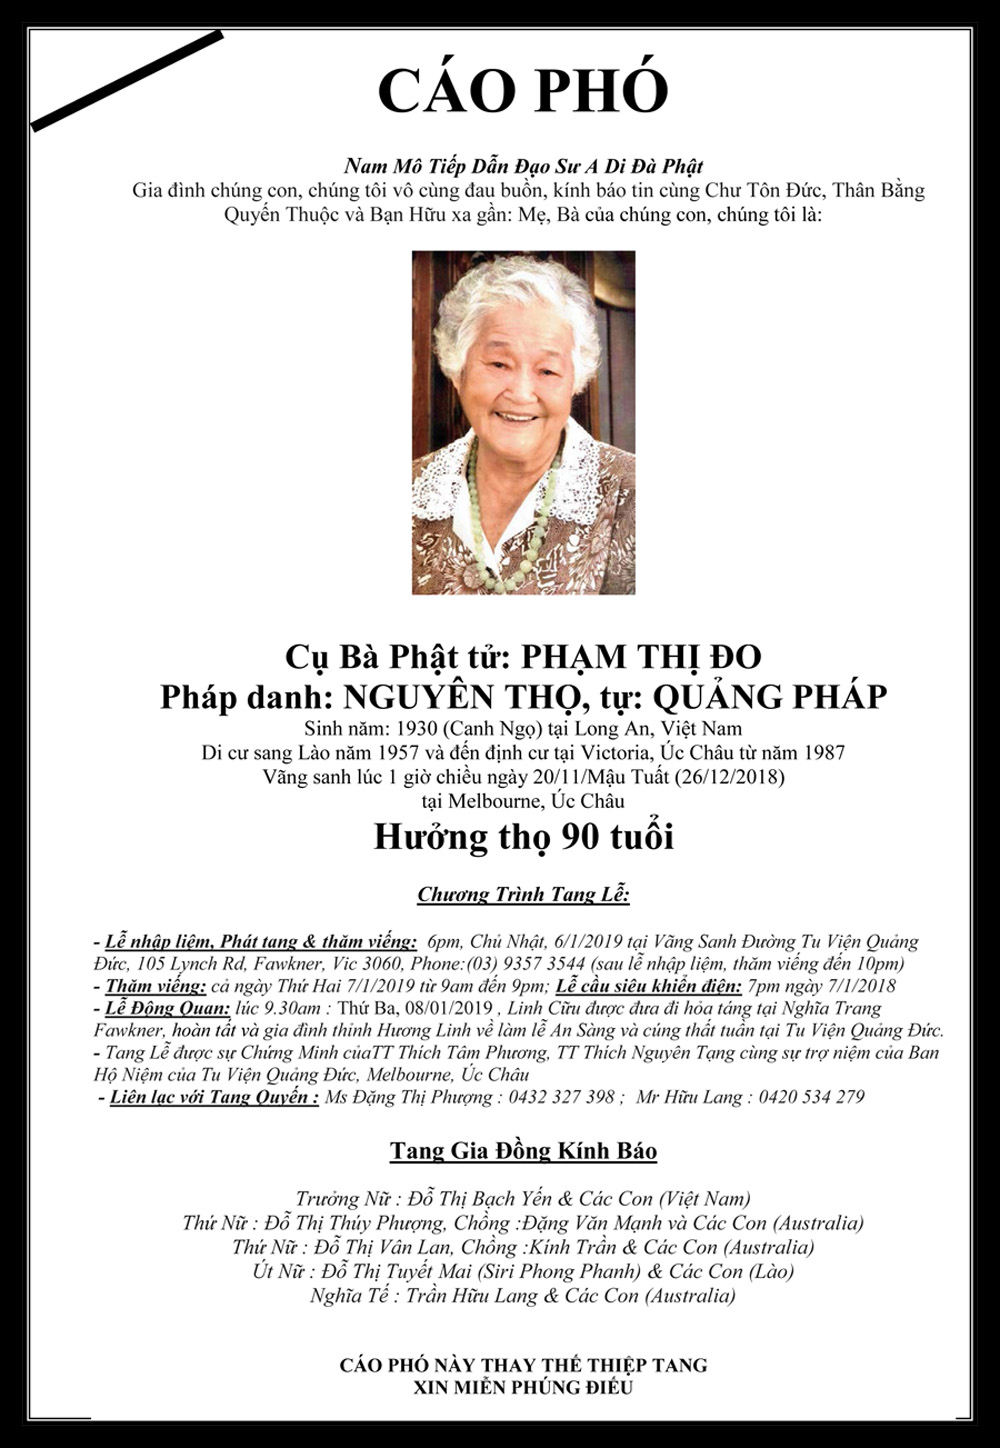 Cao Pho Tang Le Cu Ba Pham thi Do_1930_2018-a